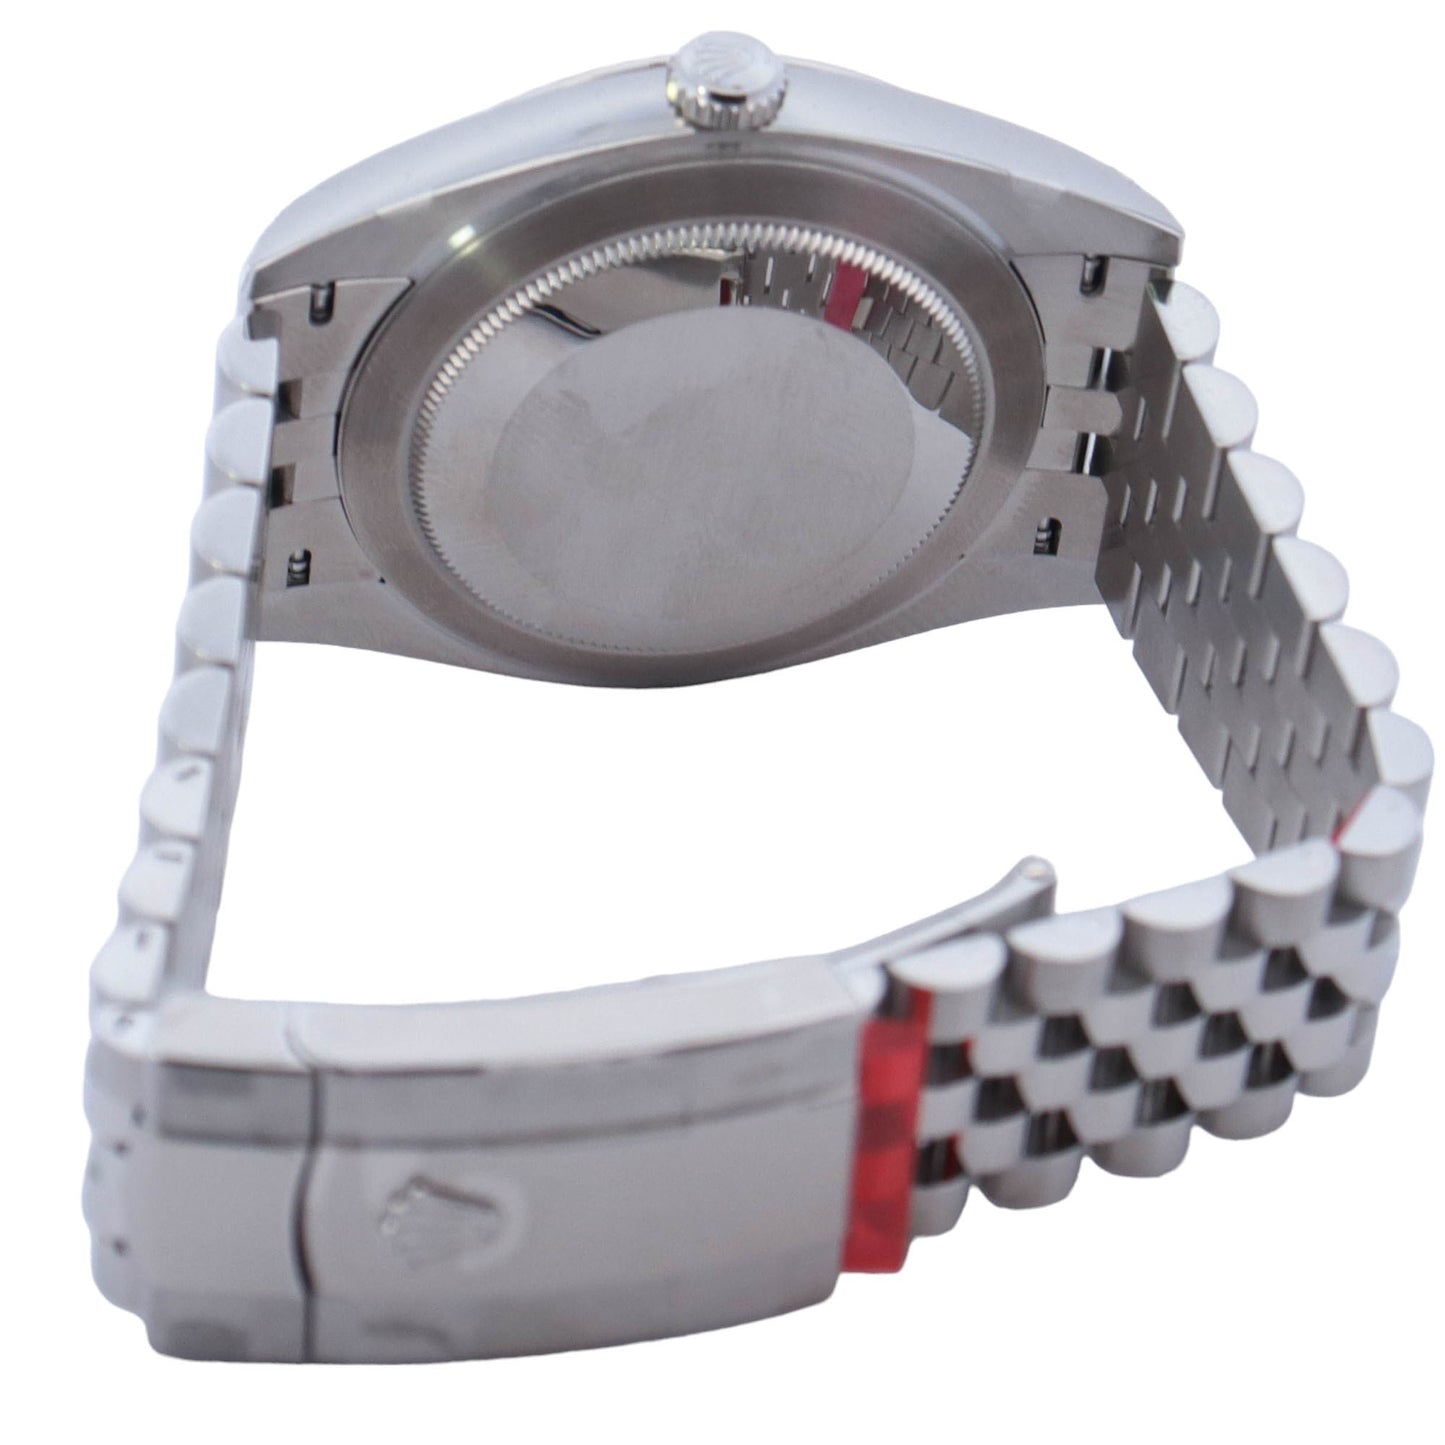 Rolex Datejust Stainless Steel 41mm White Roman Dial Watch Reference# 126334 - Happy Jewelers Fine Jewelry Lifetime Warranty